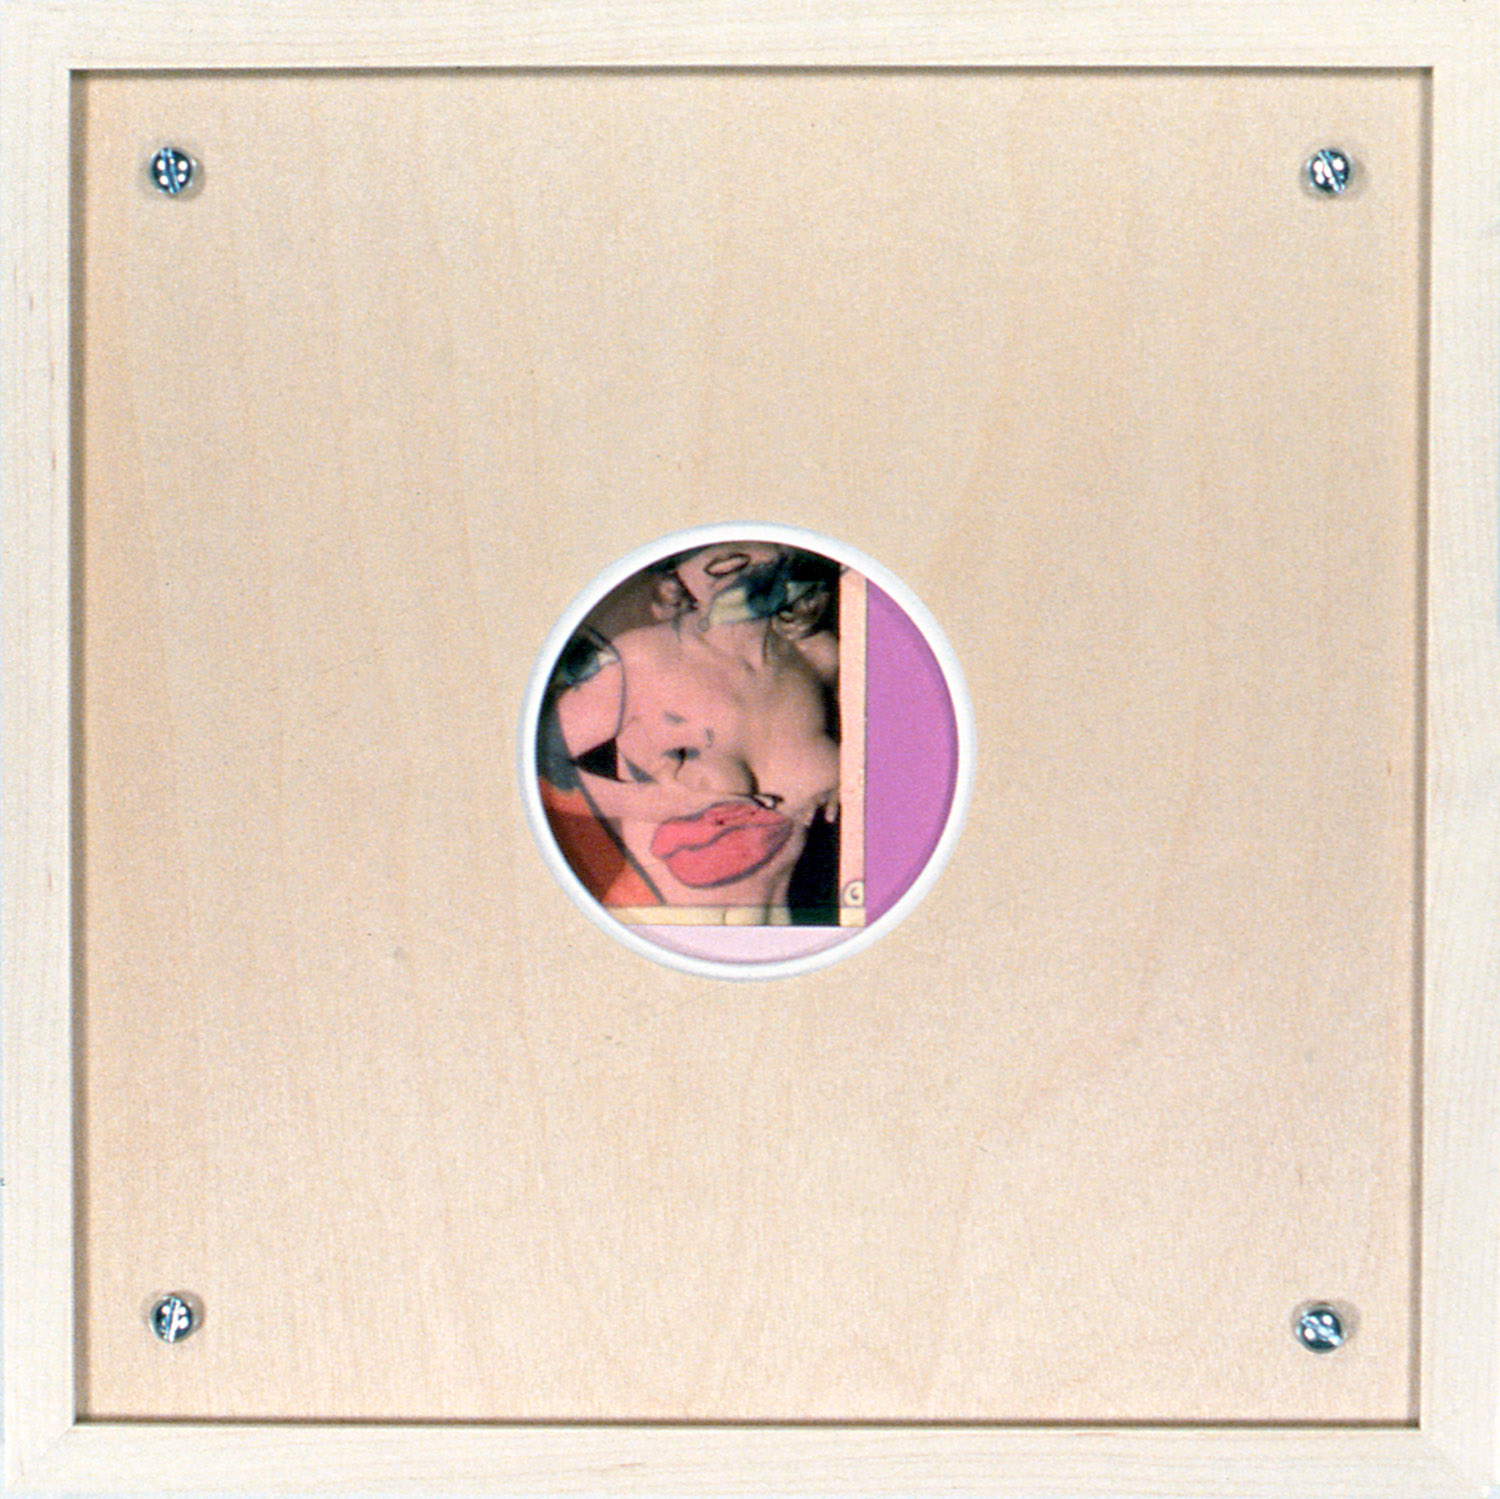   Peephole 18 , 1996, 10 1/2 x 10 1/2", mixed media with frame. 